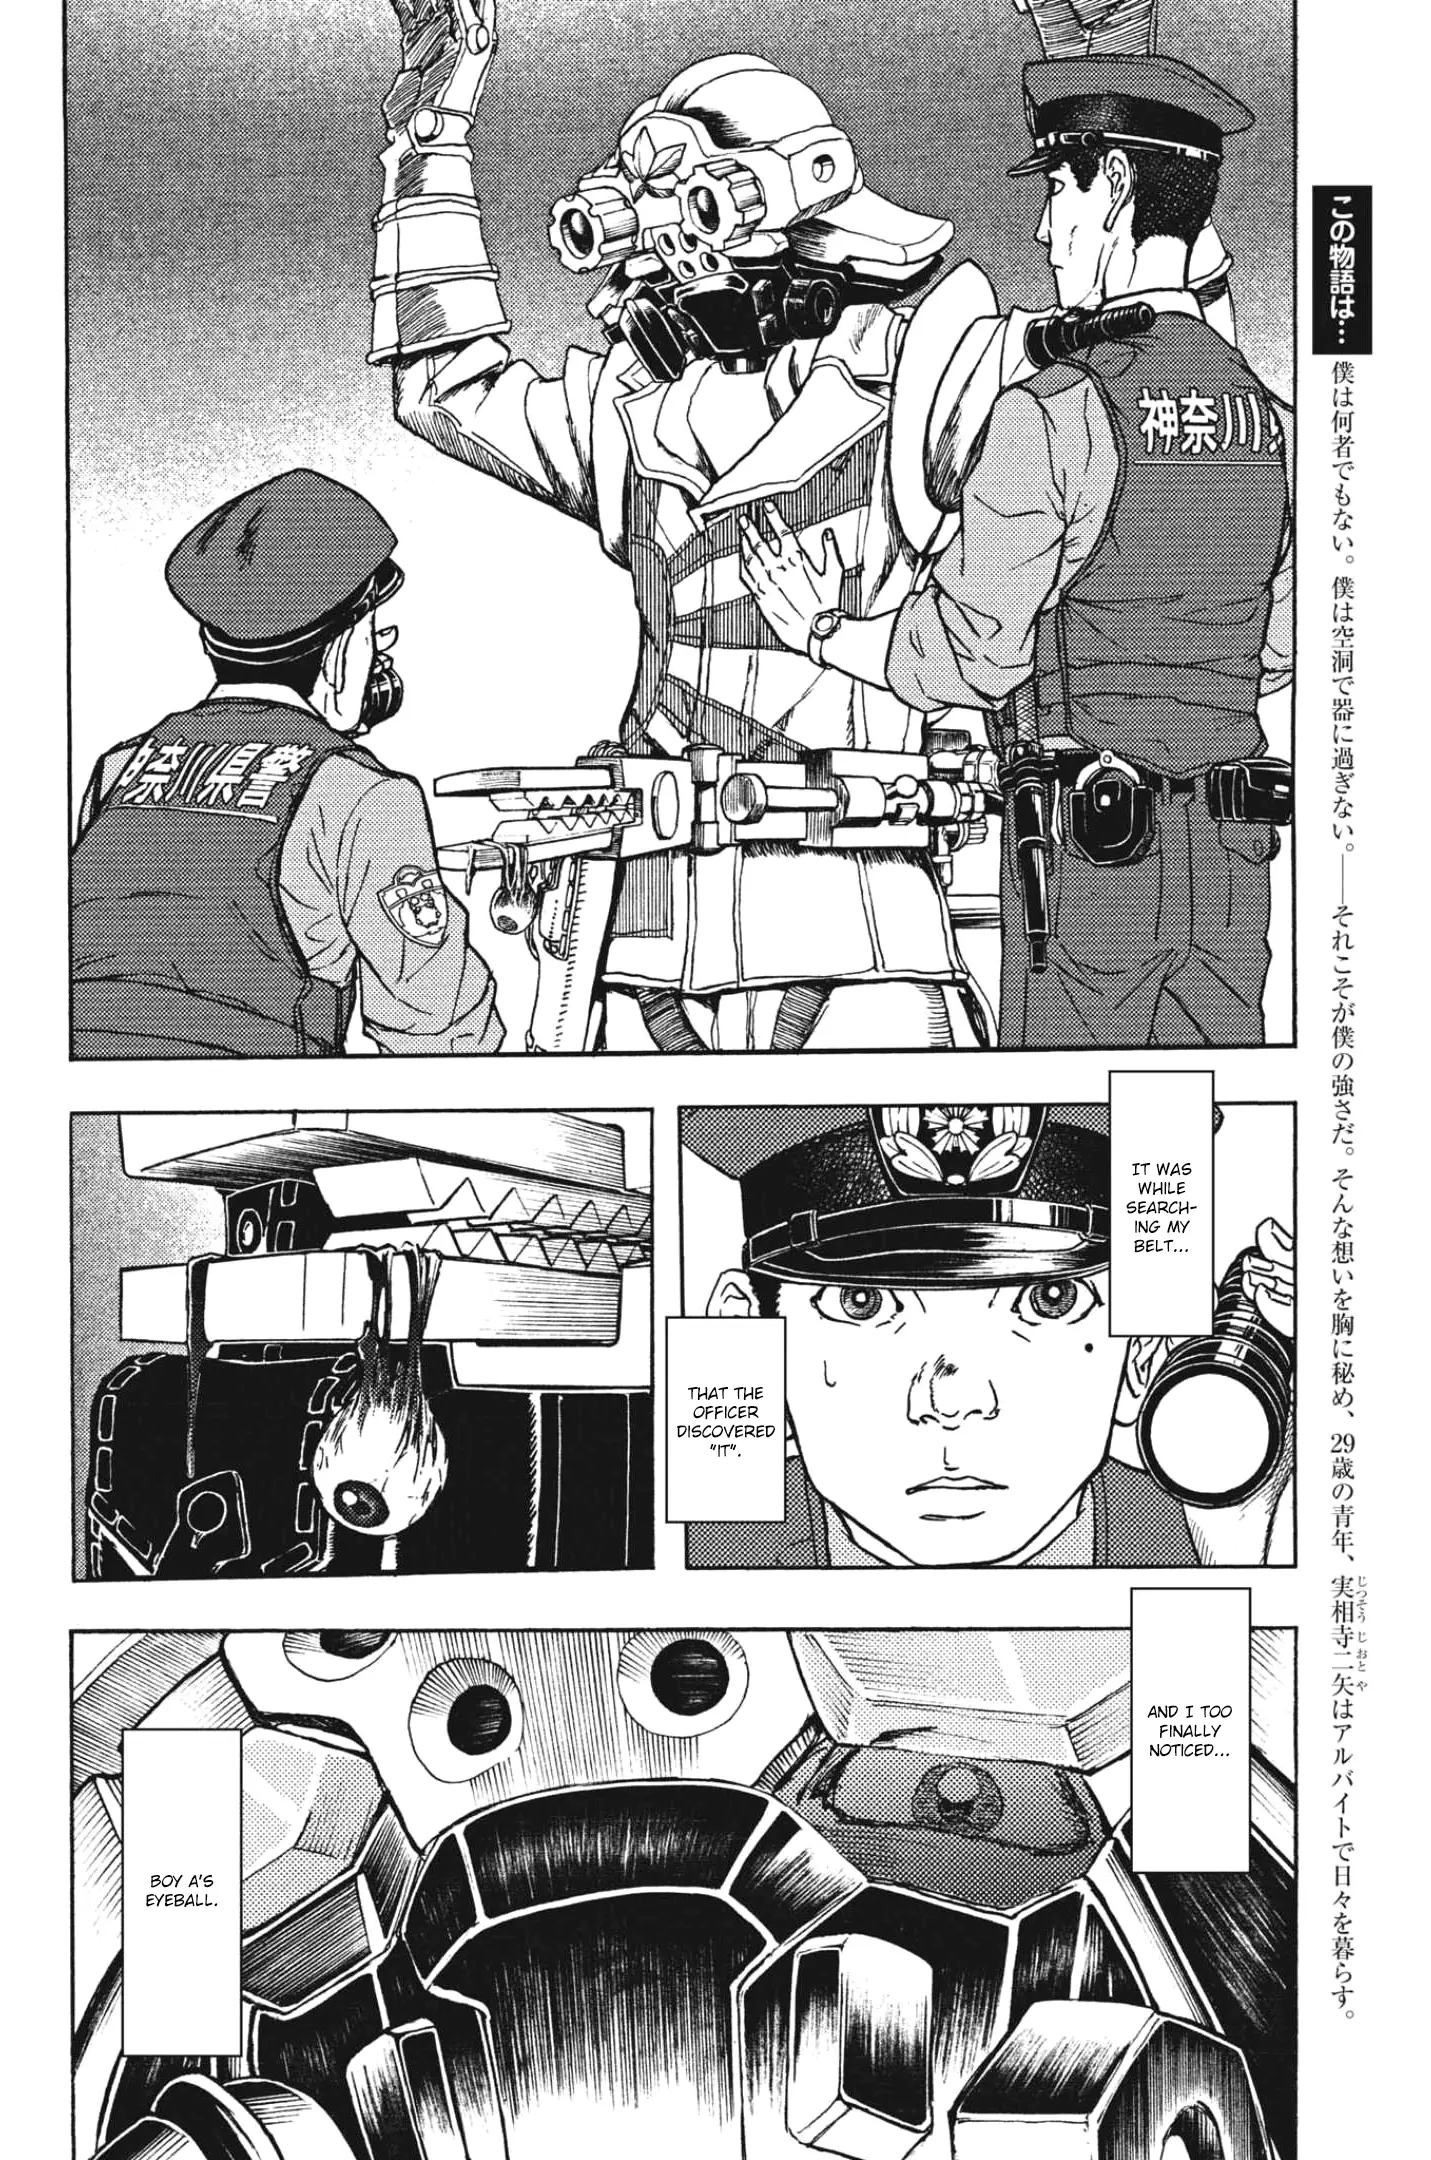 Gekikou Kamen - 15 page 4-5562978c